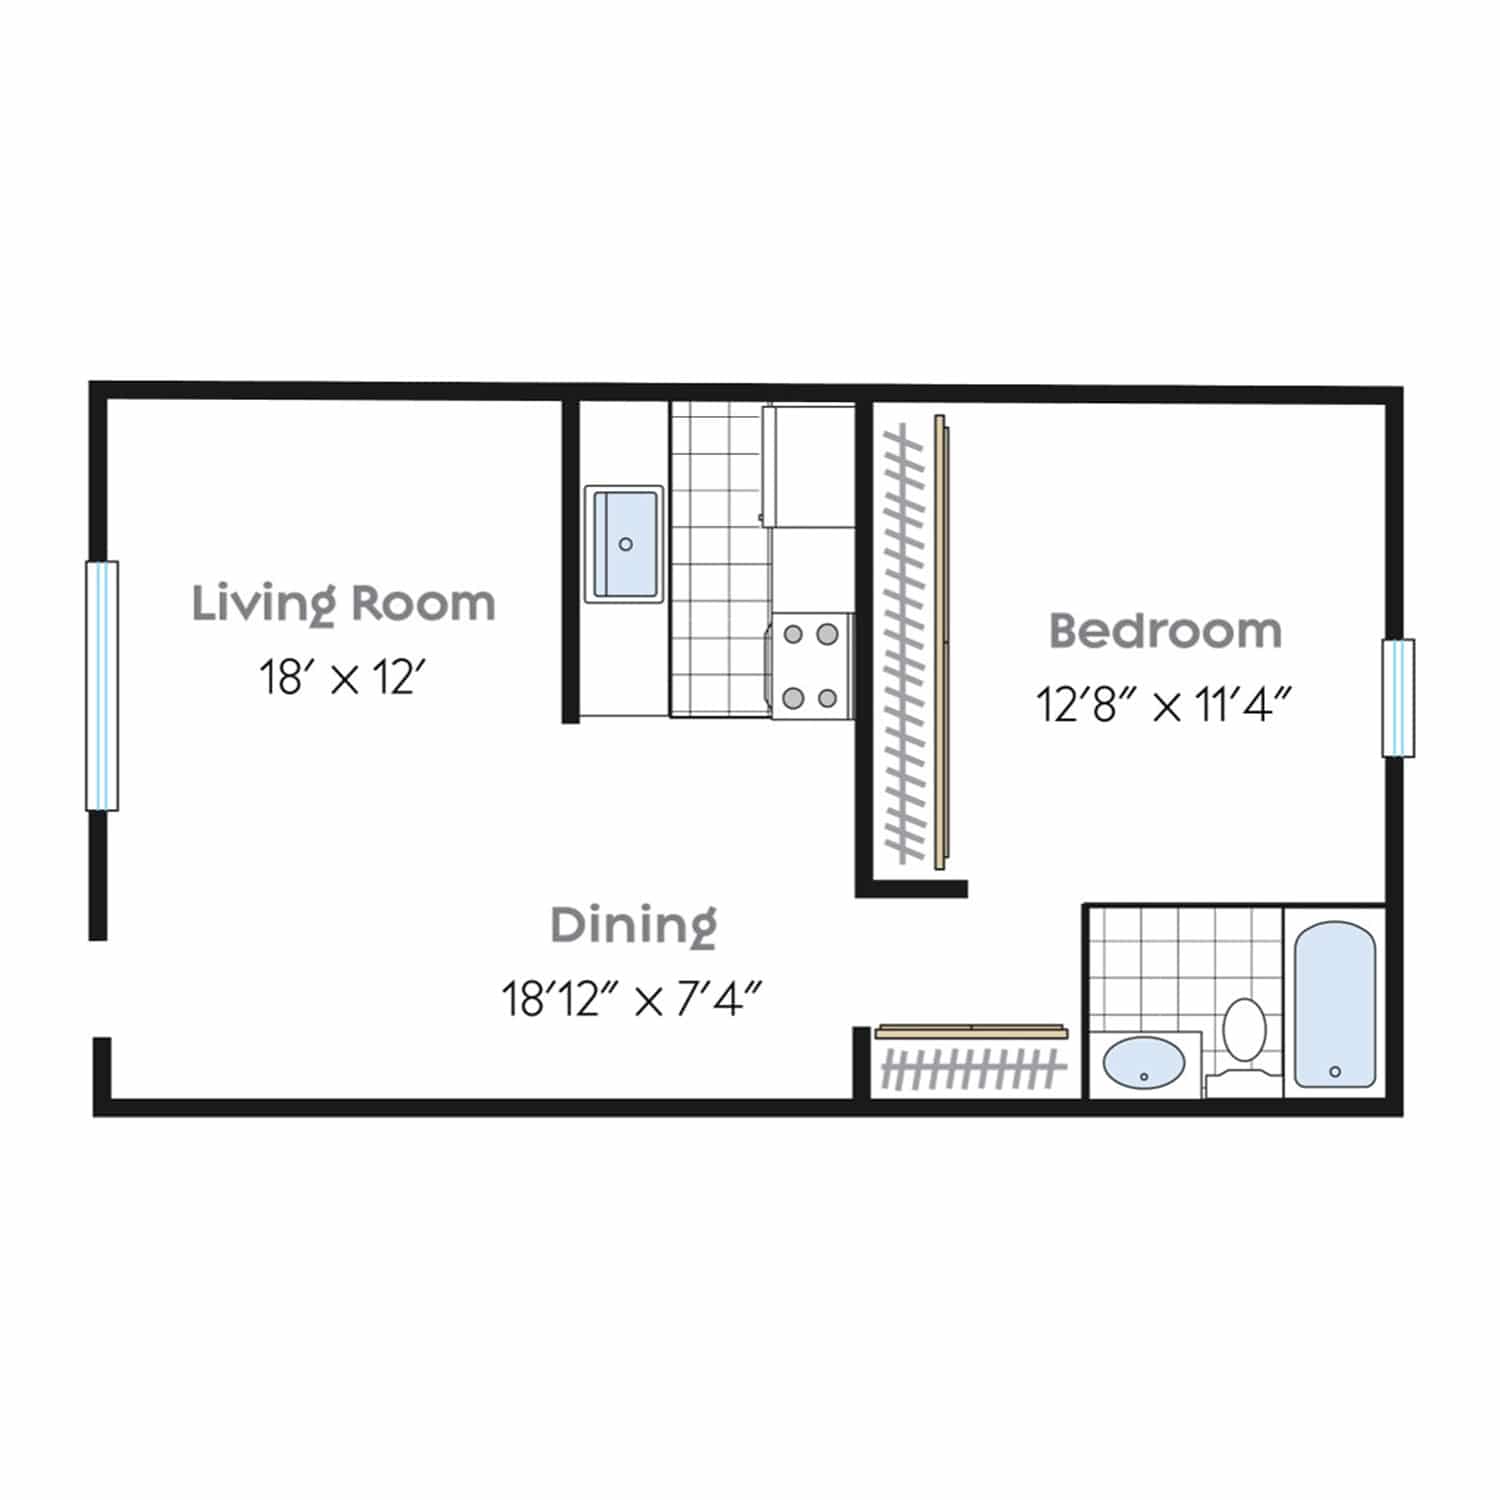 One bedroom, one bathroom floor plan.